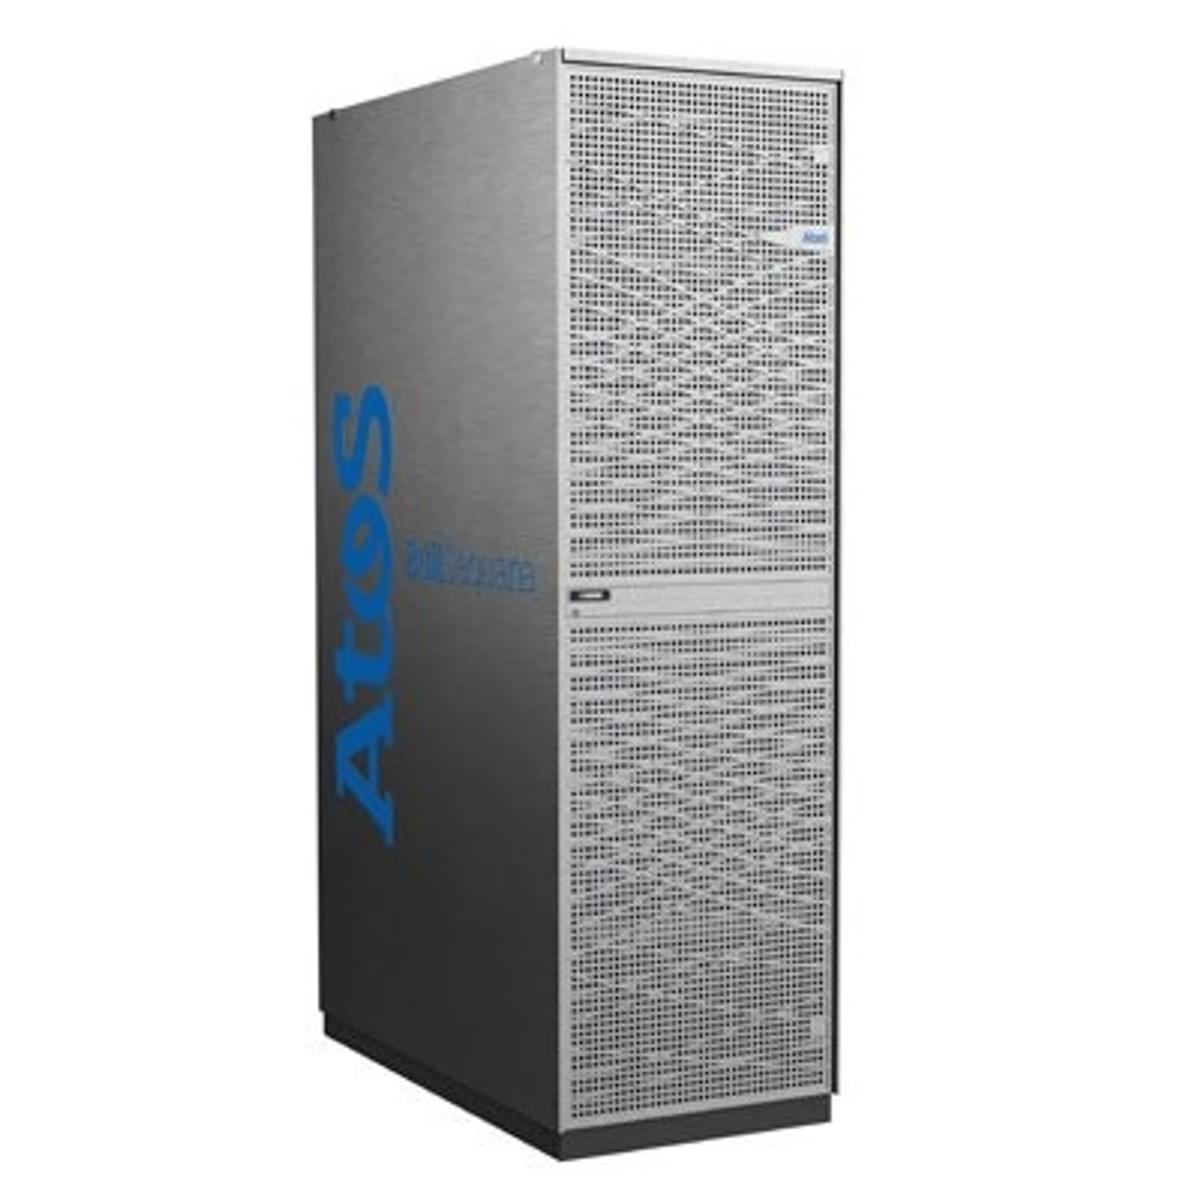 Supercomputer Atos breekt records image